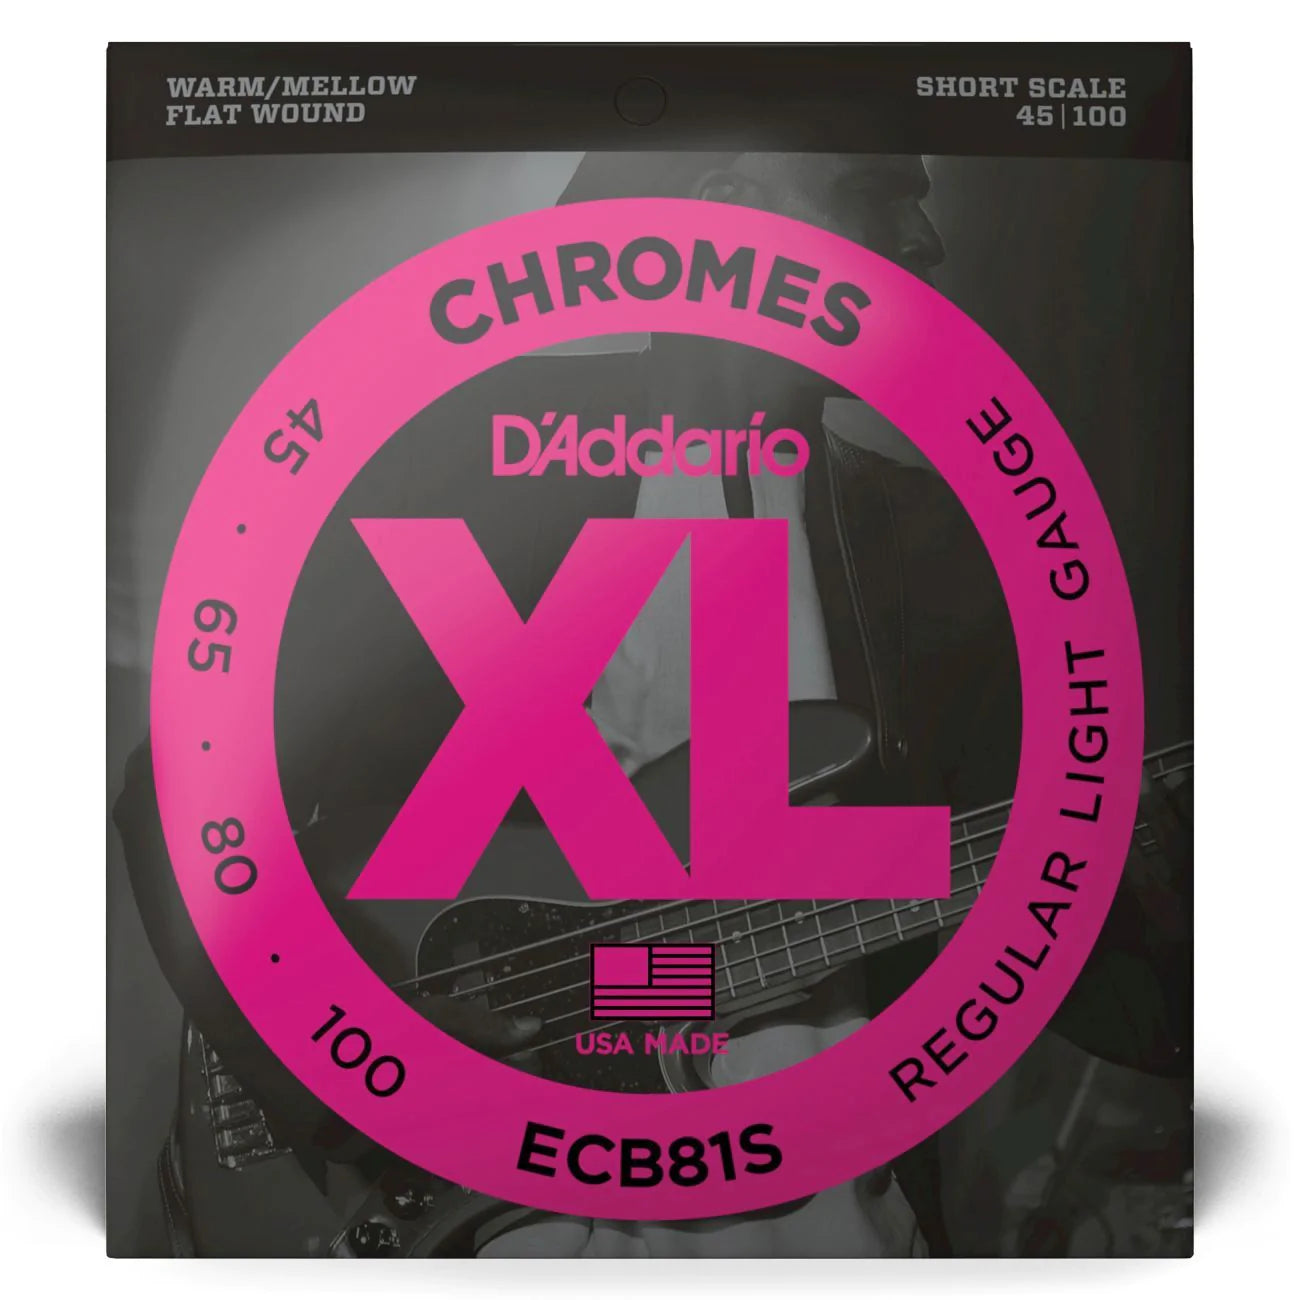 D'Addario ECB81S | Chromes Flatwound Bass Strings 45-100 Gauge | Regular Light | Short Scale